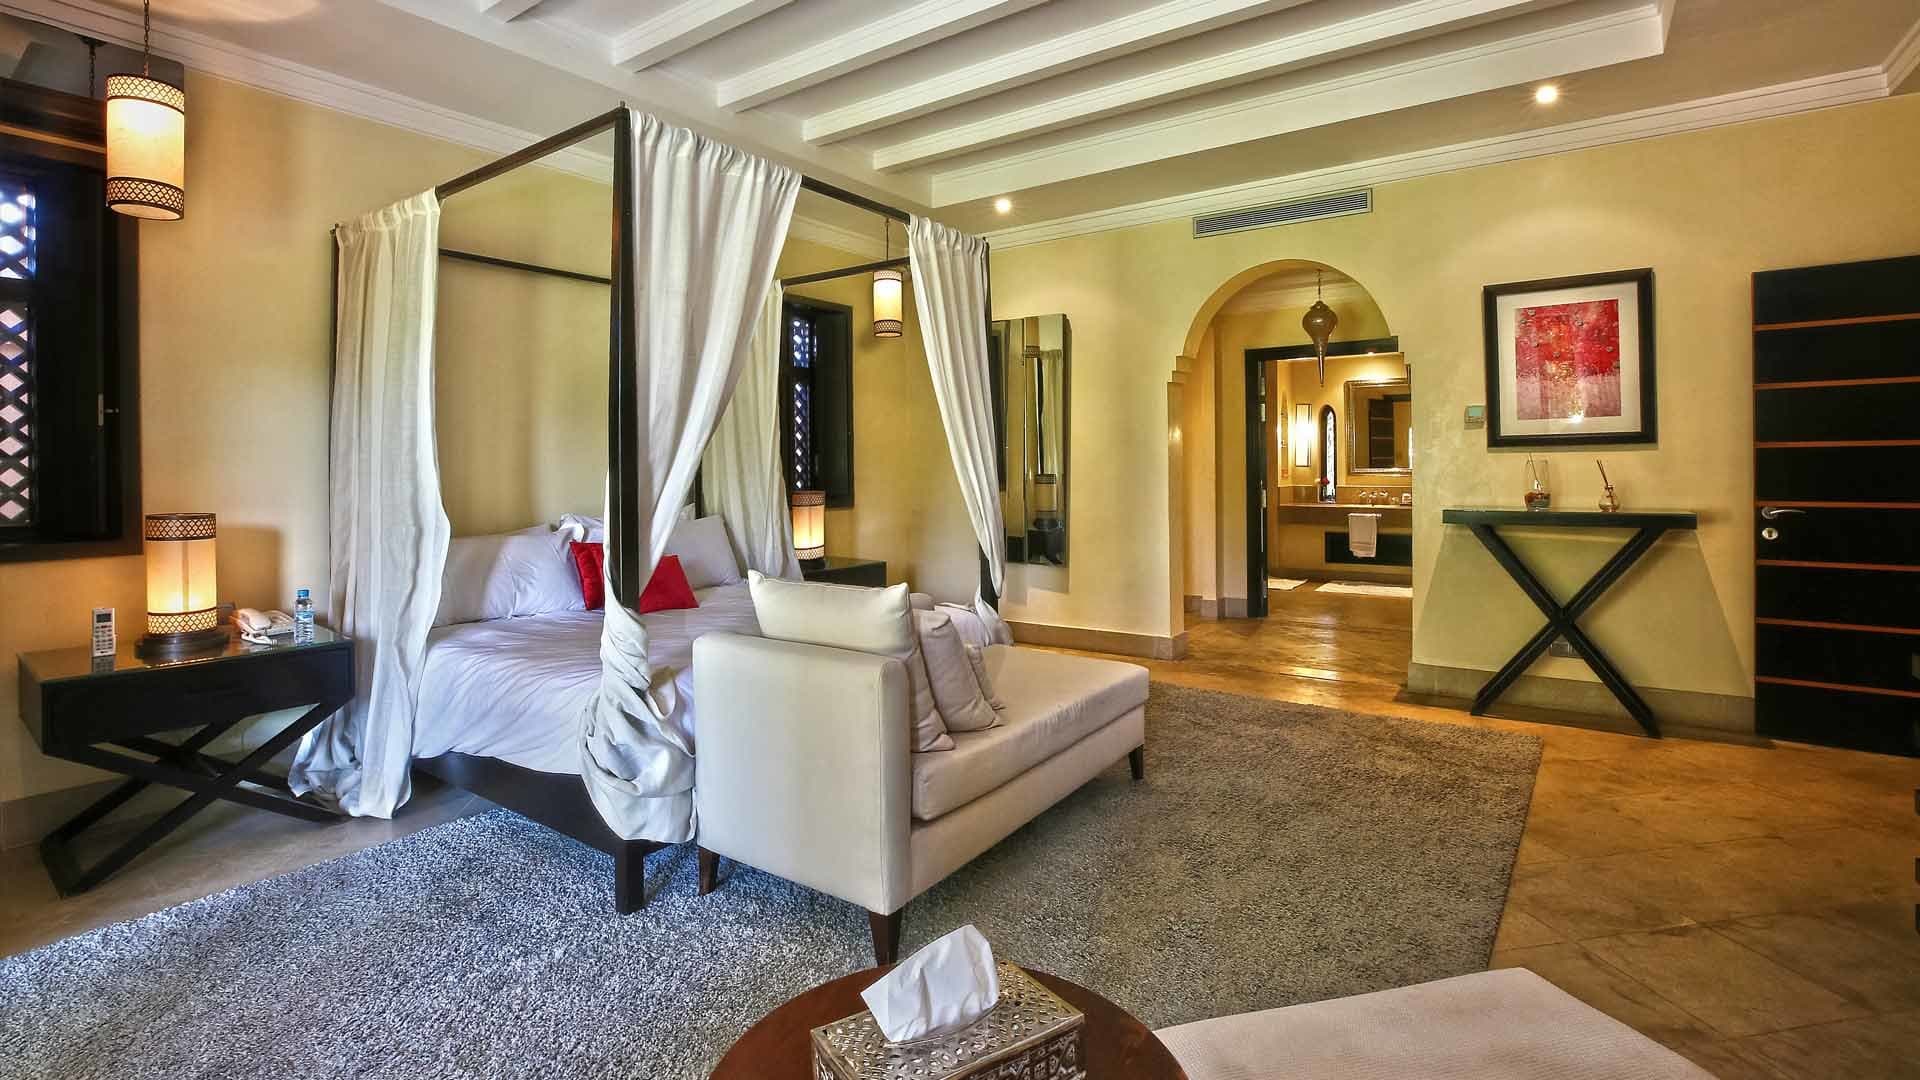 5 Bedroom Villa For Sale Marrakech Lp08725 51e26f98805eec0.jpg